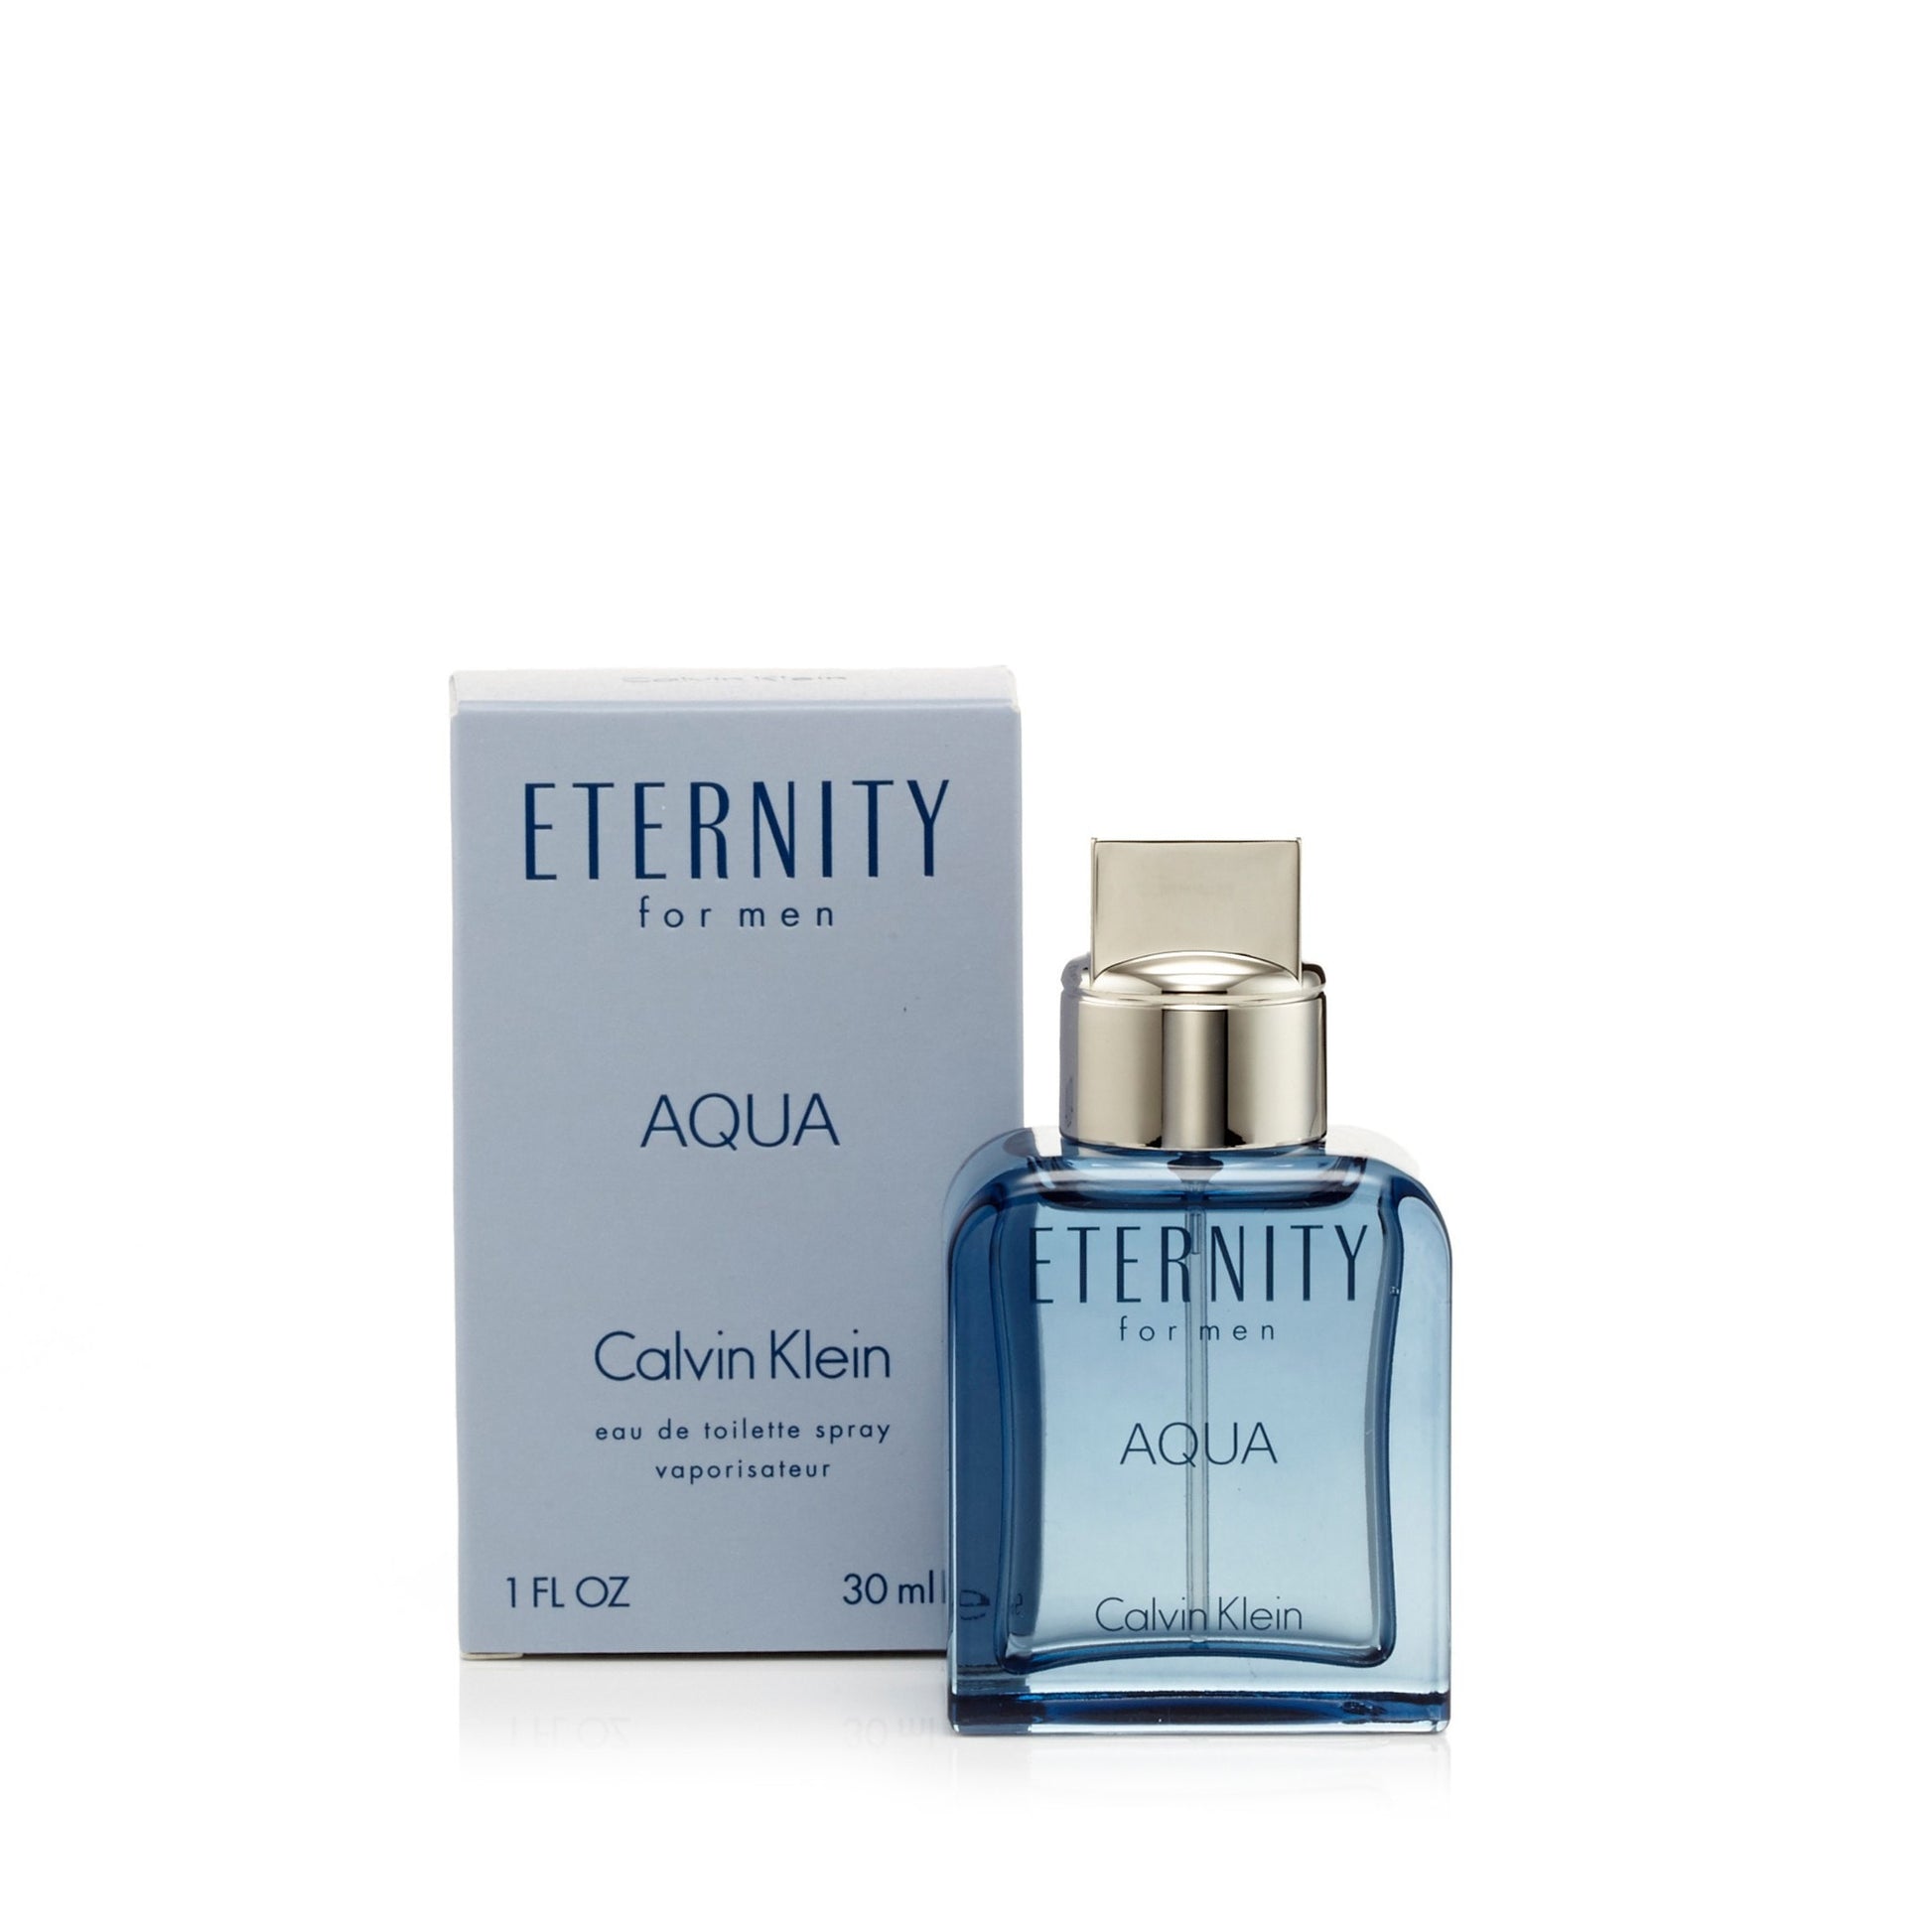 Eternity Aqua Eau de Toilette Spray for Men by Calvin Klein 1.0 oz. Click to open in modal